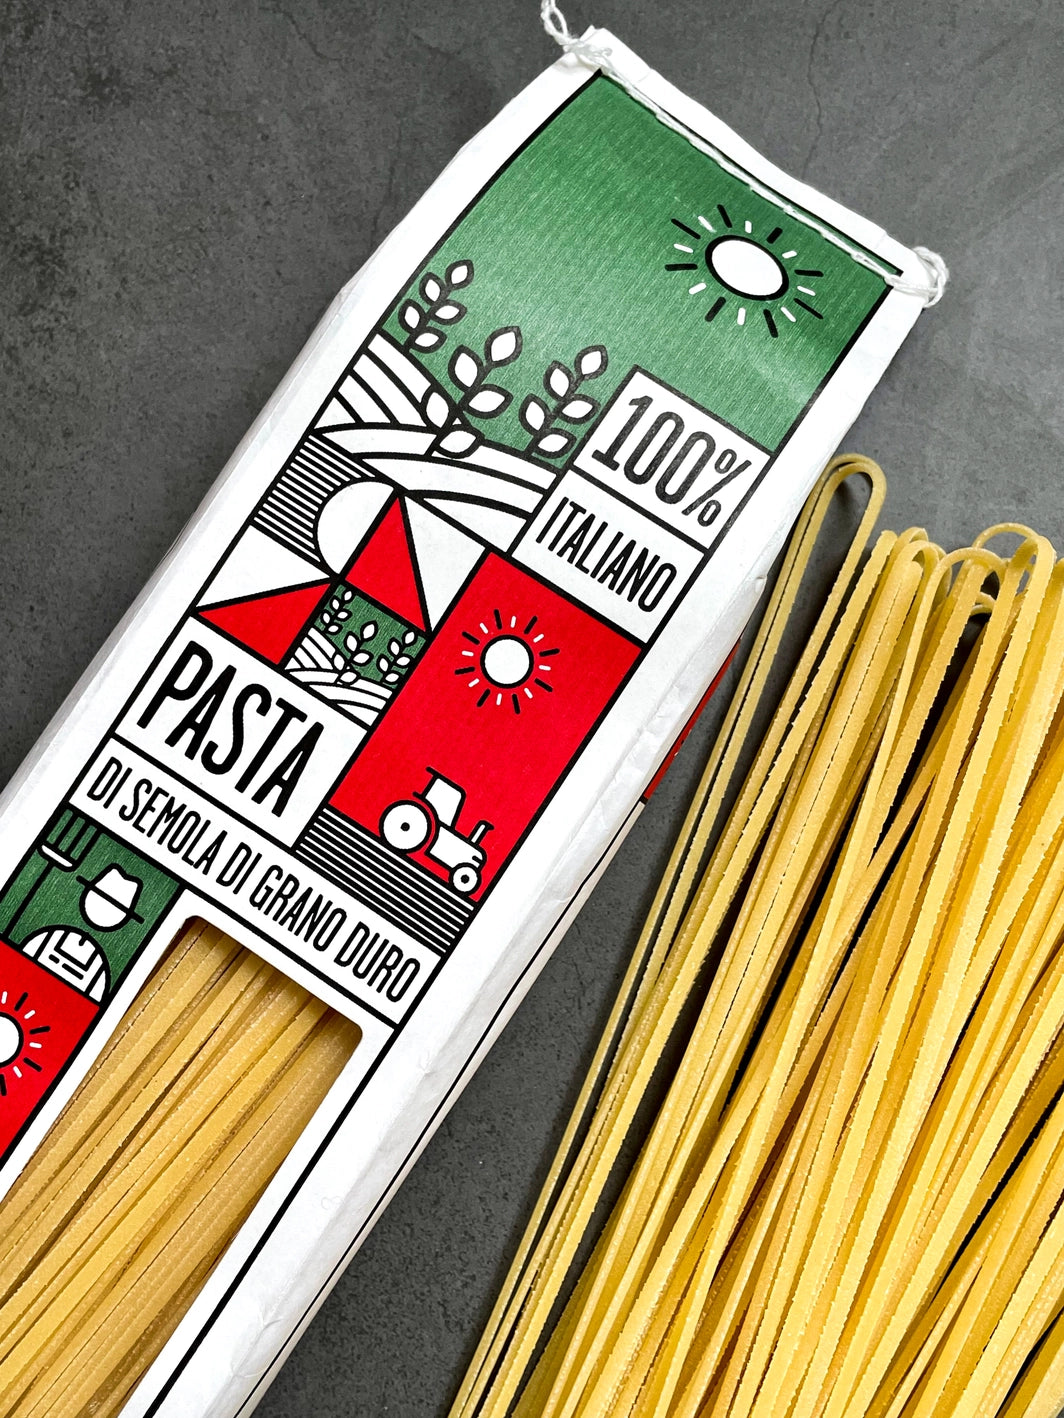 Linguini - 100% Italian artisanal pasta